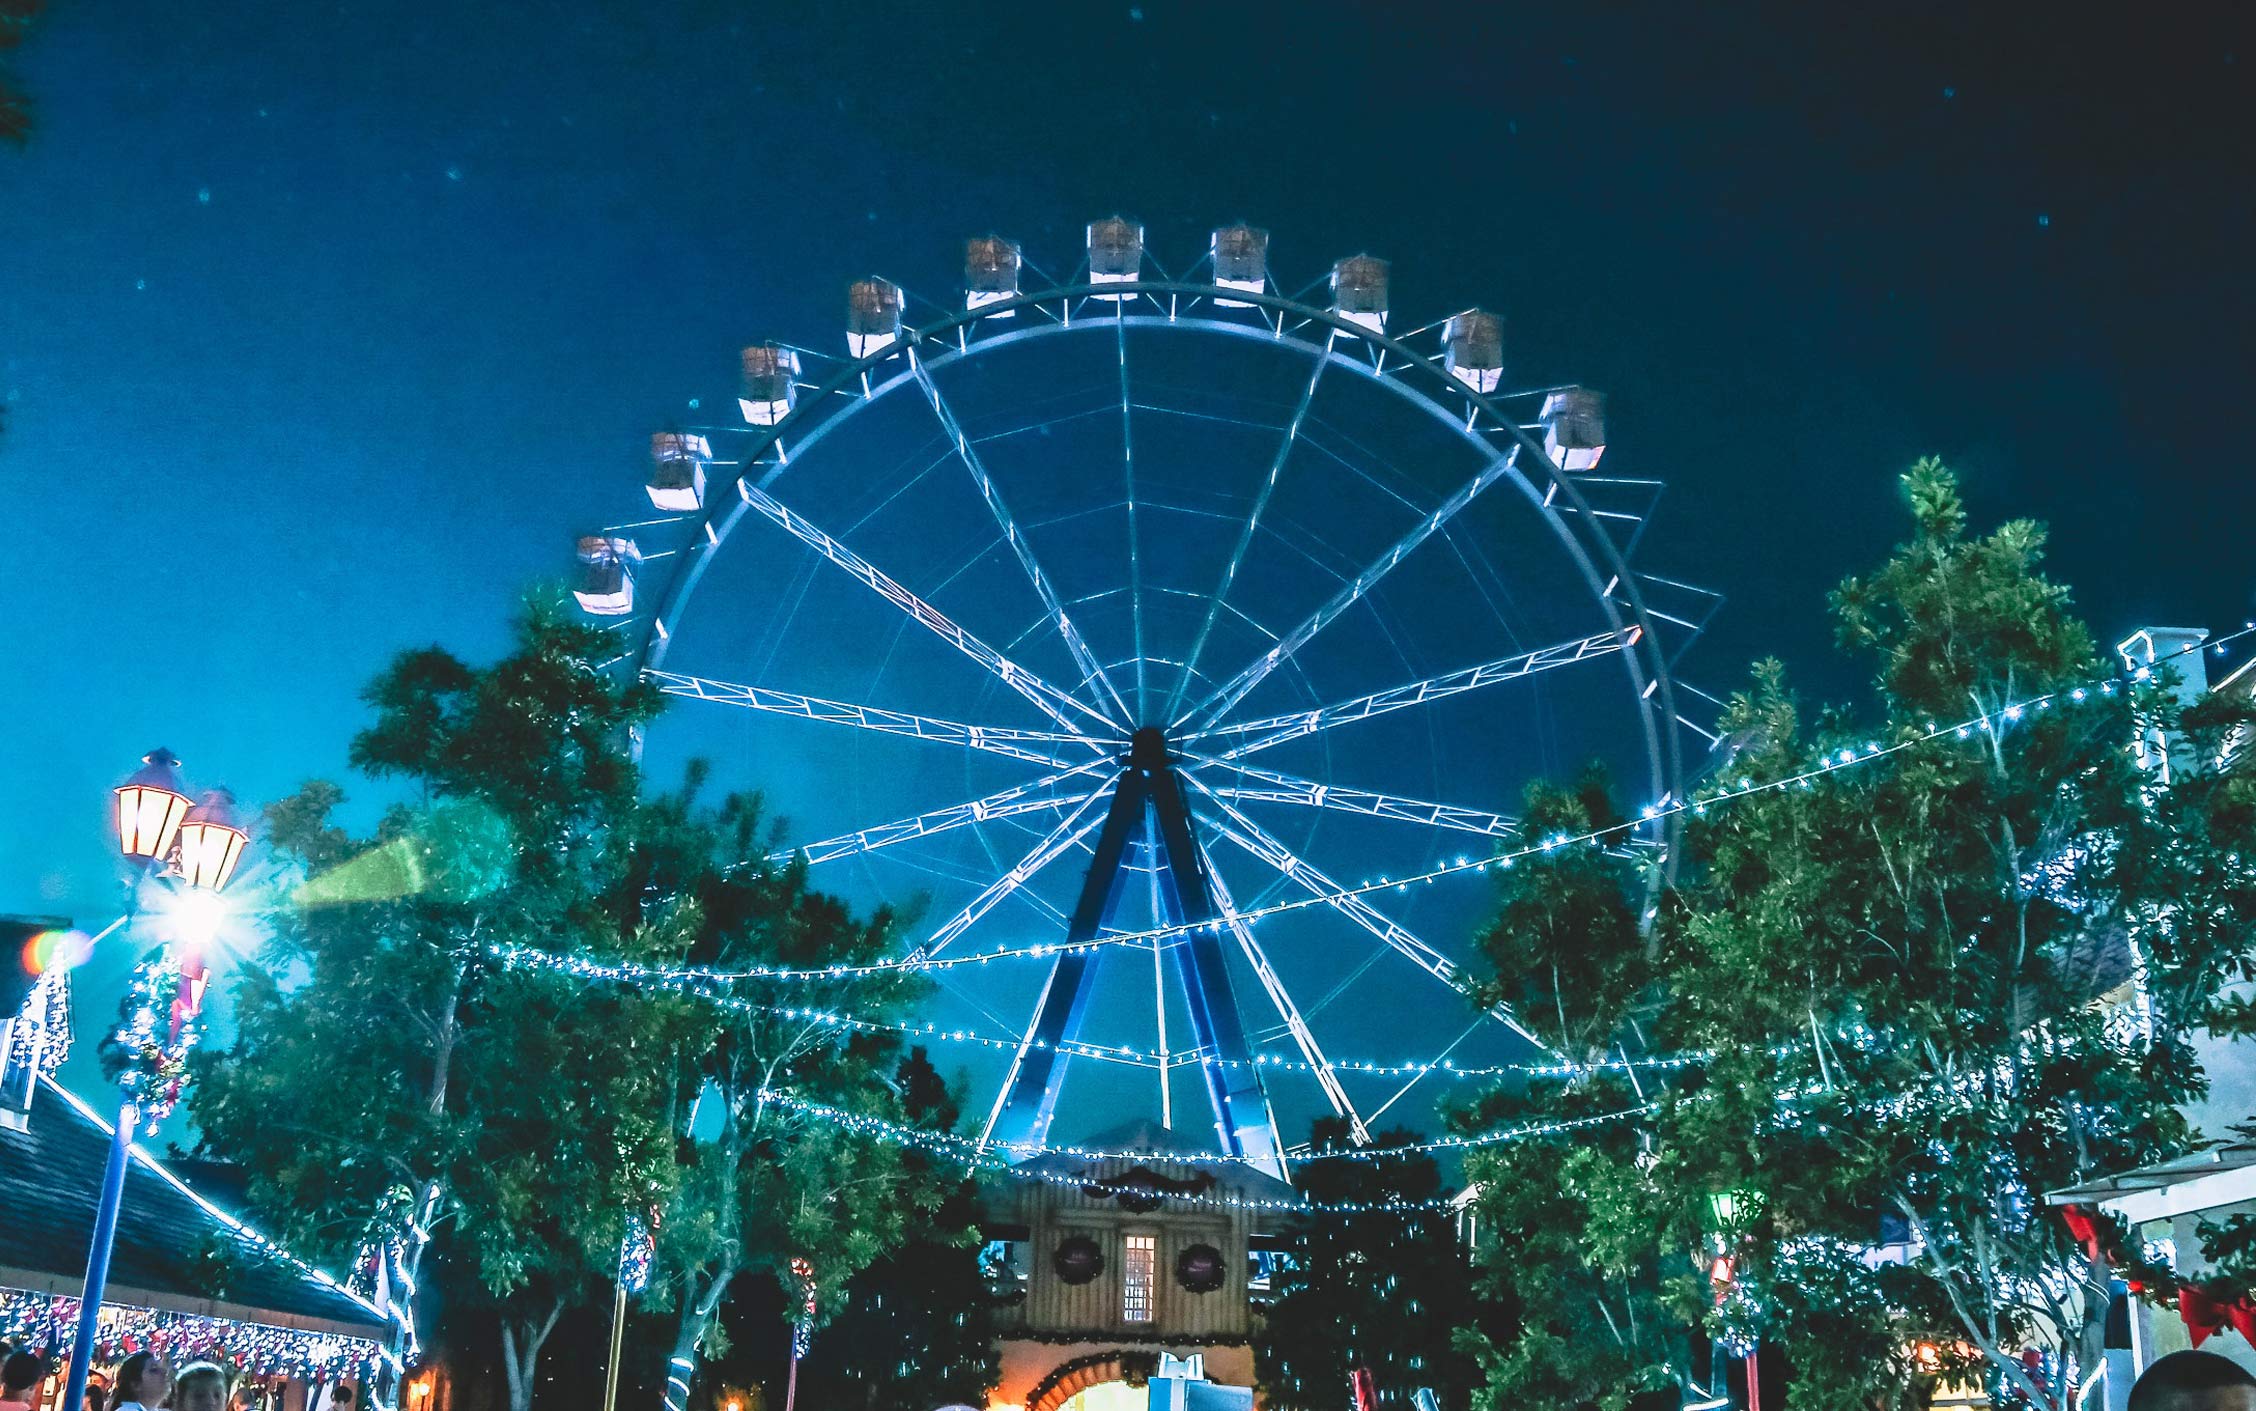 A ferris wheel at night